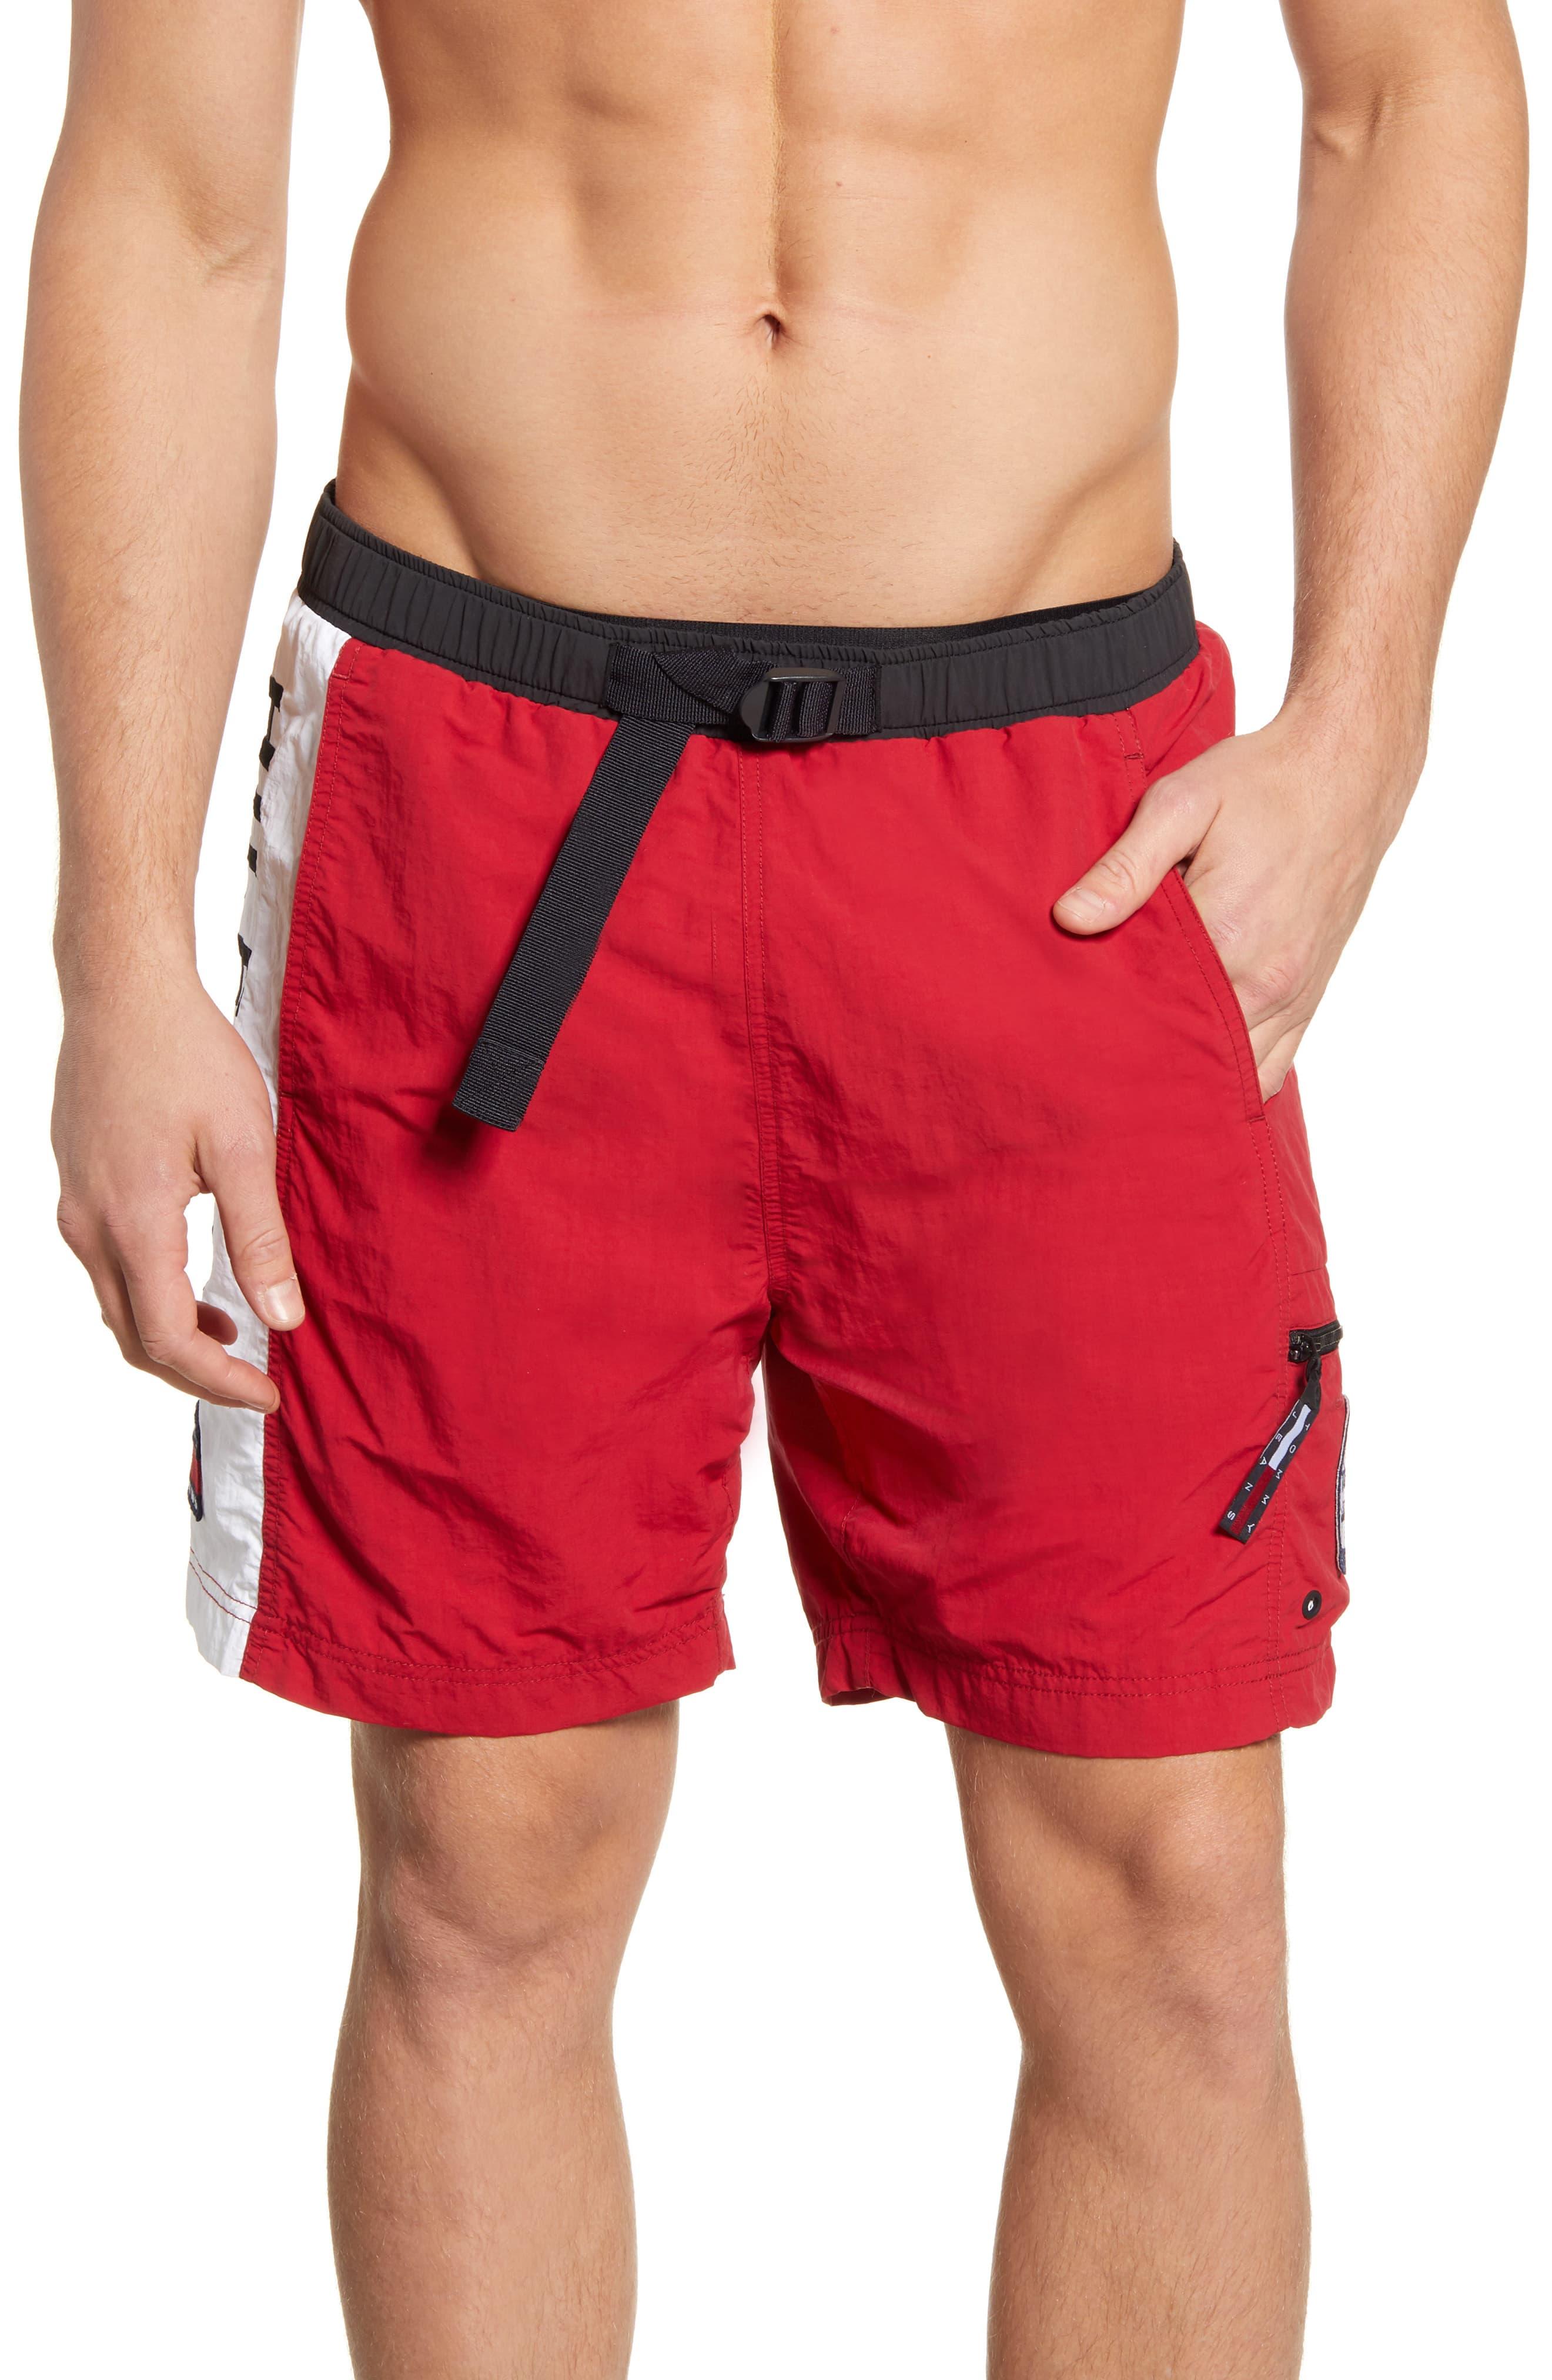 Tommy Hilfiger Logo Swim Trunks in Red for Men - Lyst